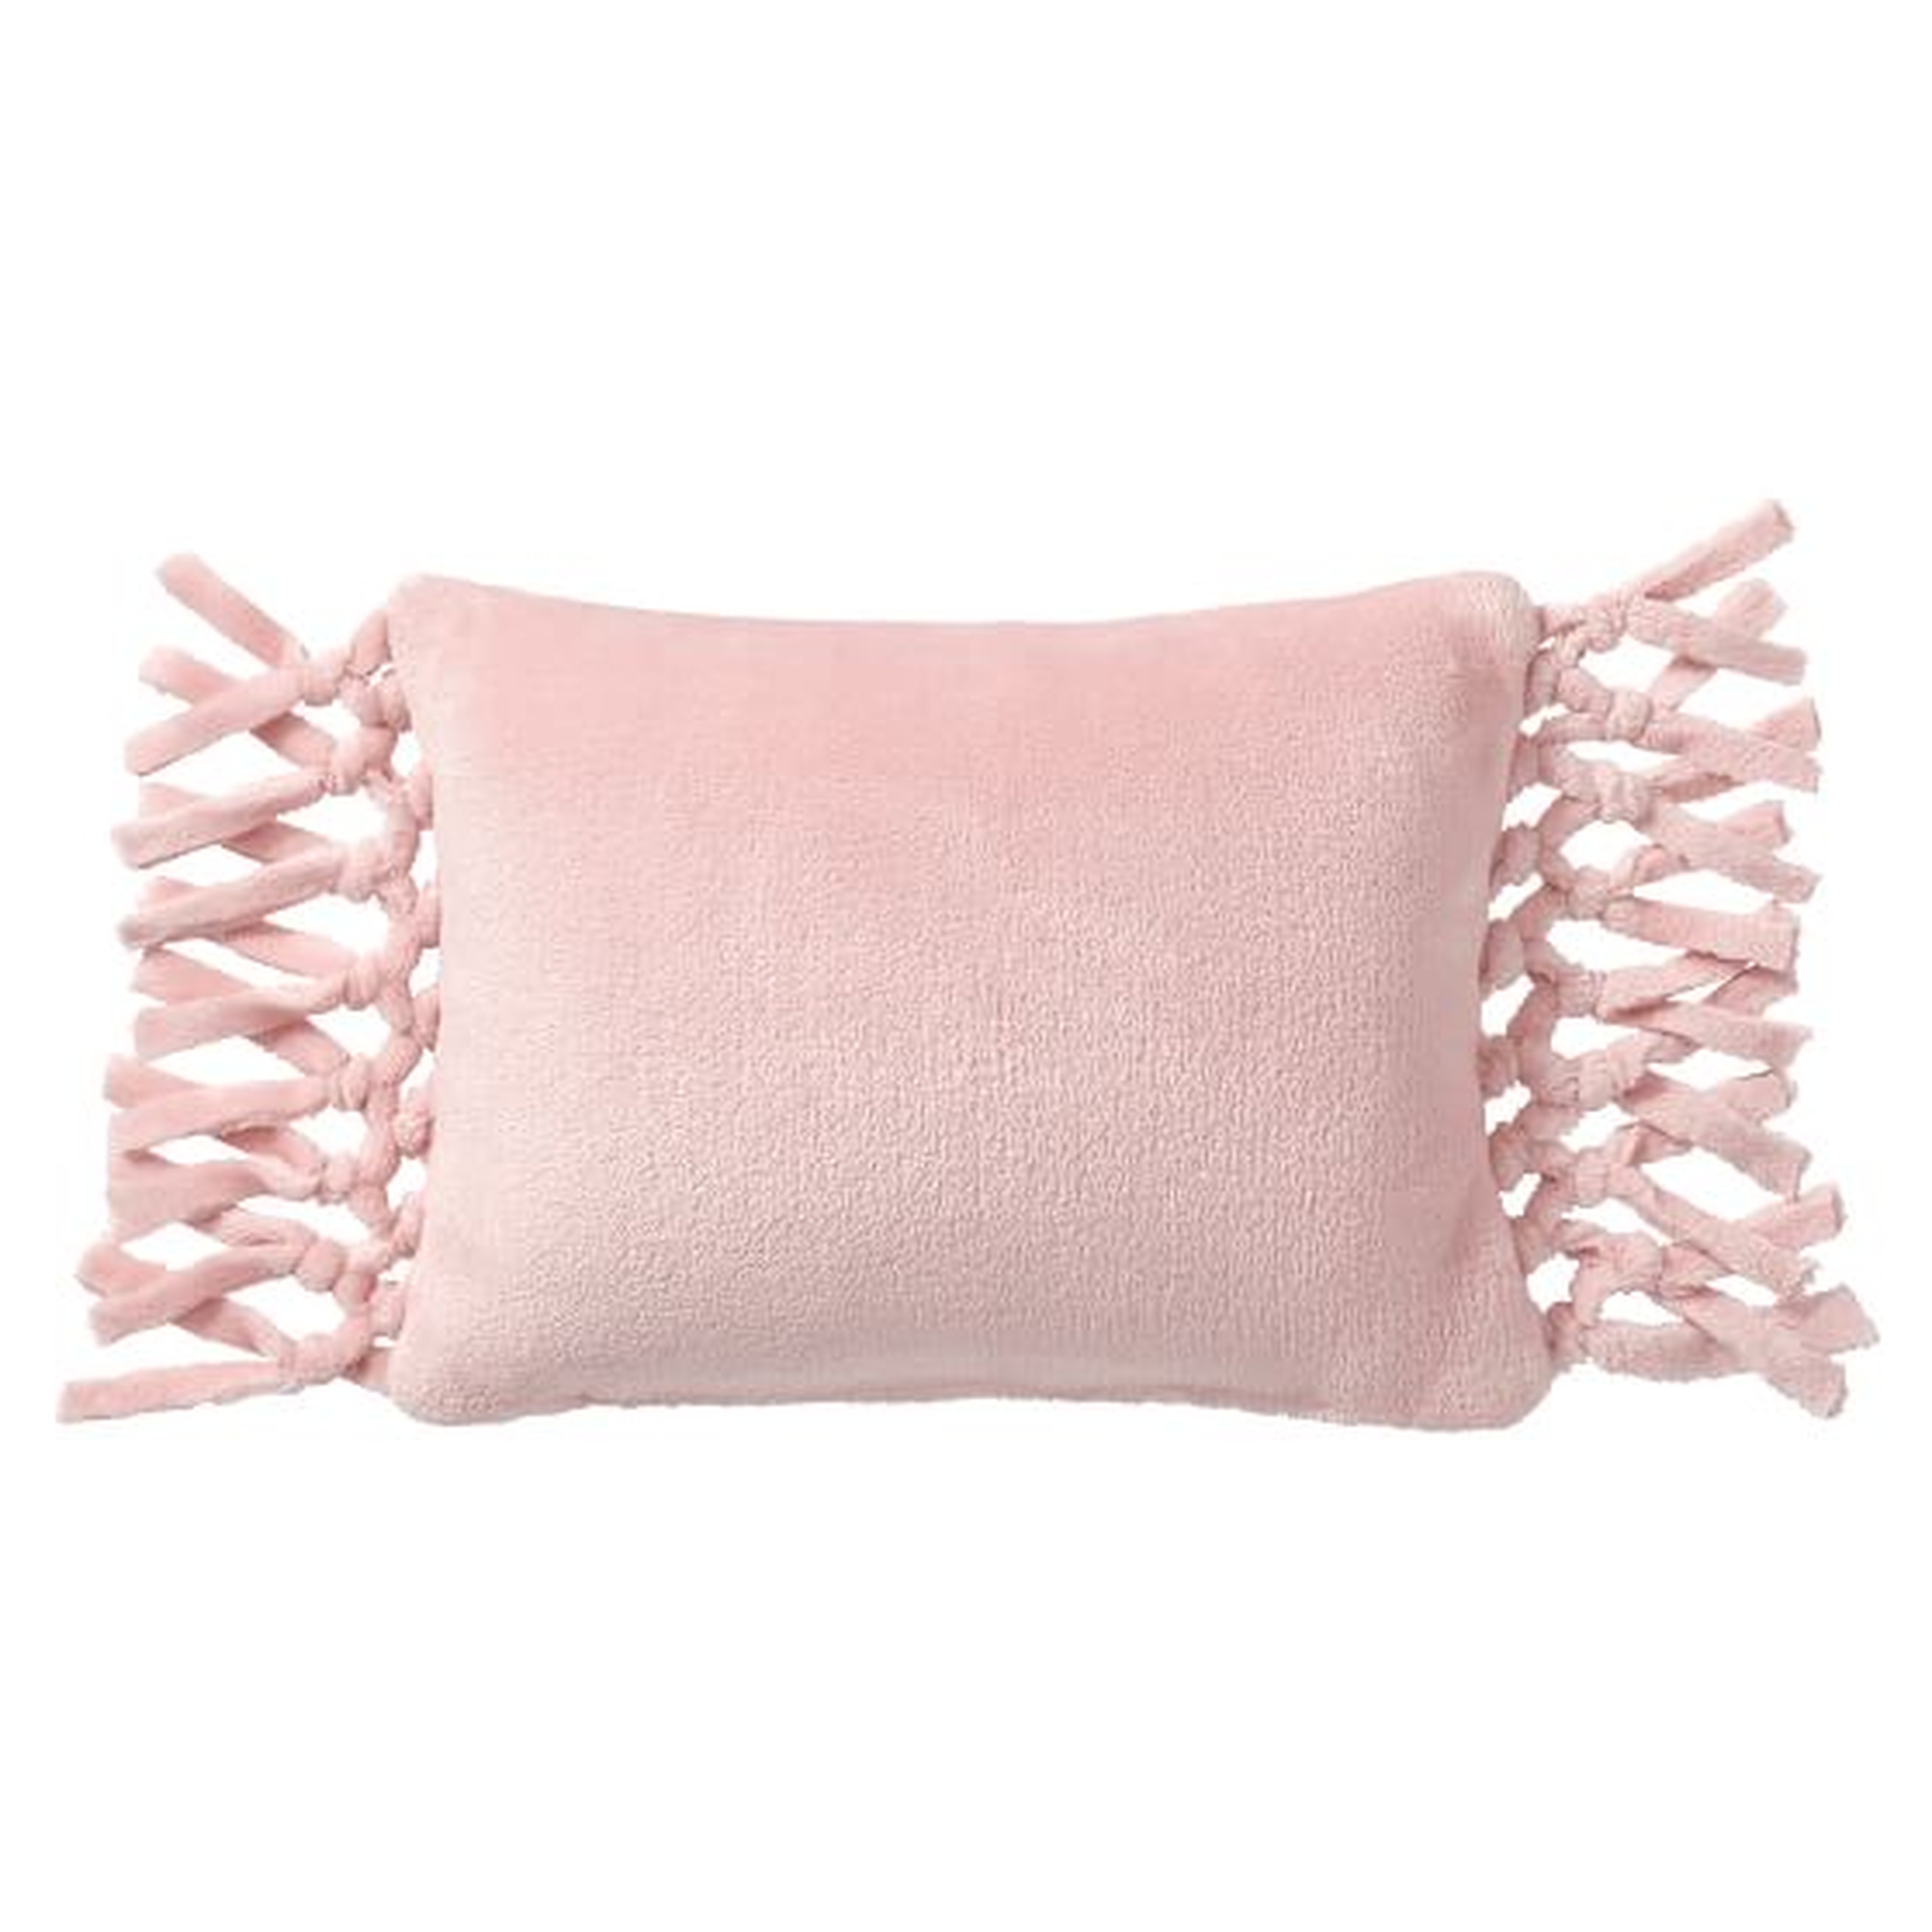 Bohemian Fringe Plush Pillow 12x16 (Quartz blush) no insert needed - Pottery Barn Teen